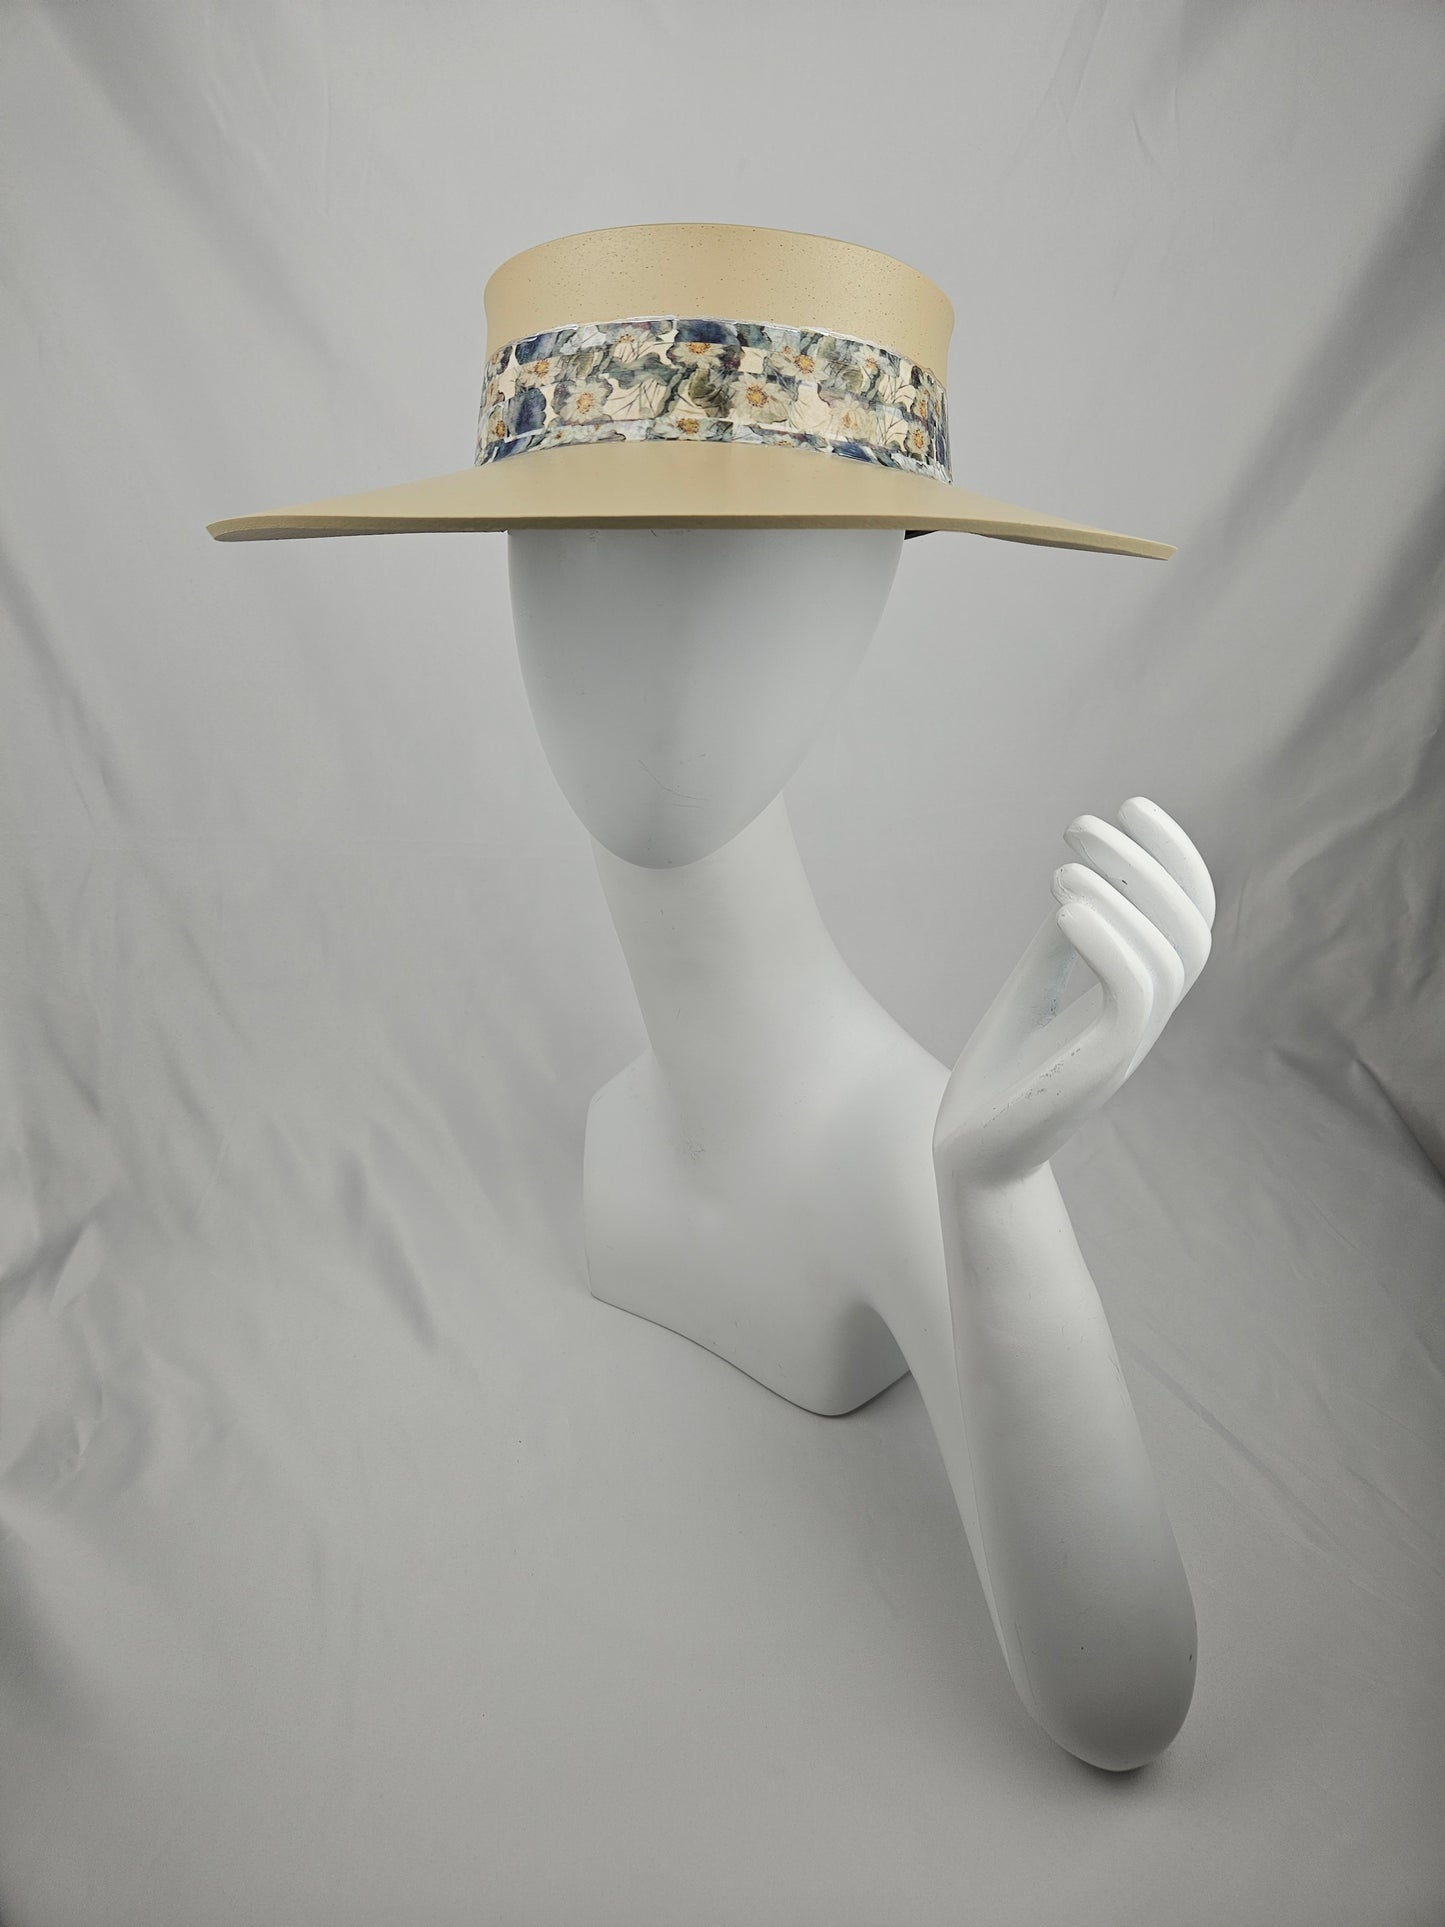 Beautiful Beige Audrey Foam Sun Visor Hat with Beautiful Blue Floral Band: 1950s, Walks, Brunch, Tea, Golf, Wedding, Church, No Headache, Derby